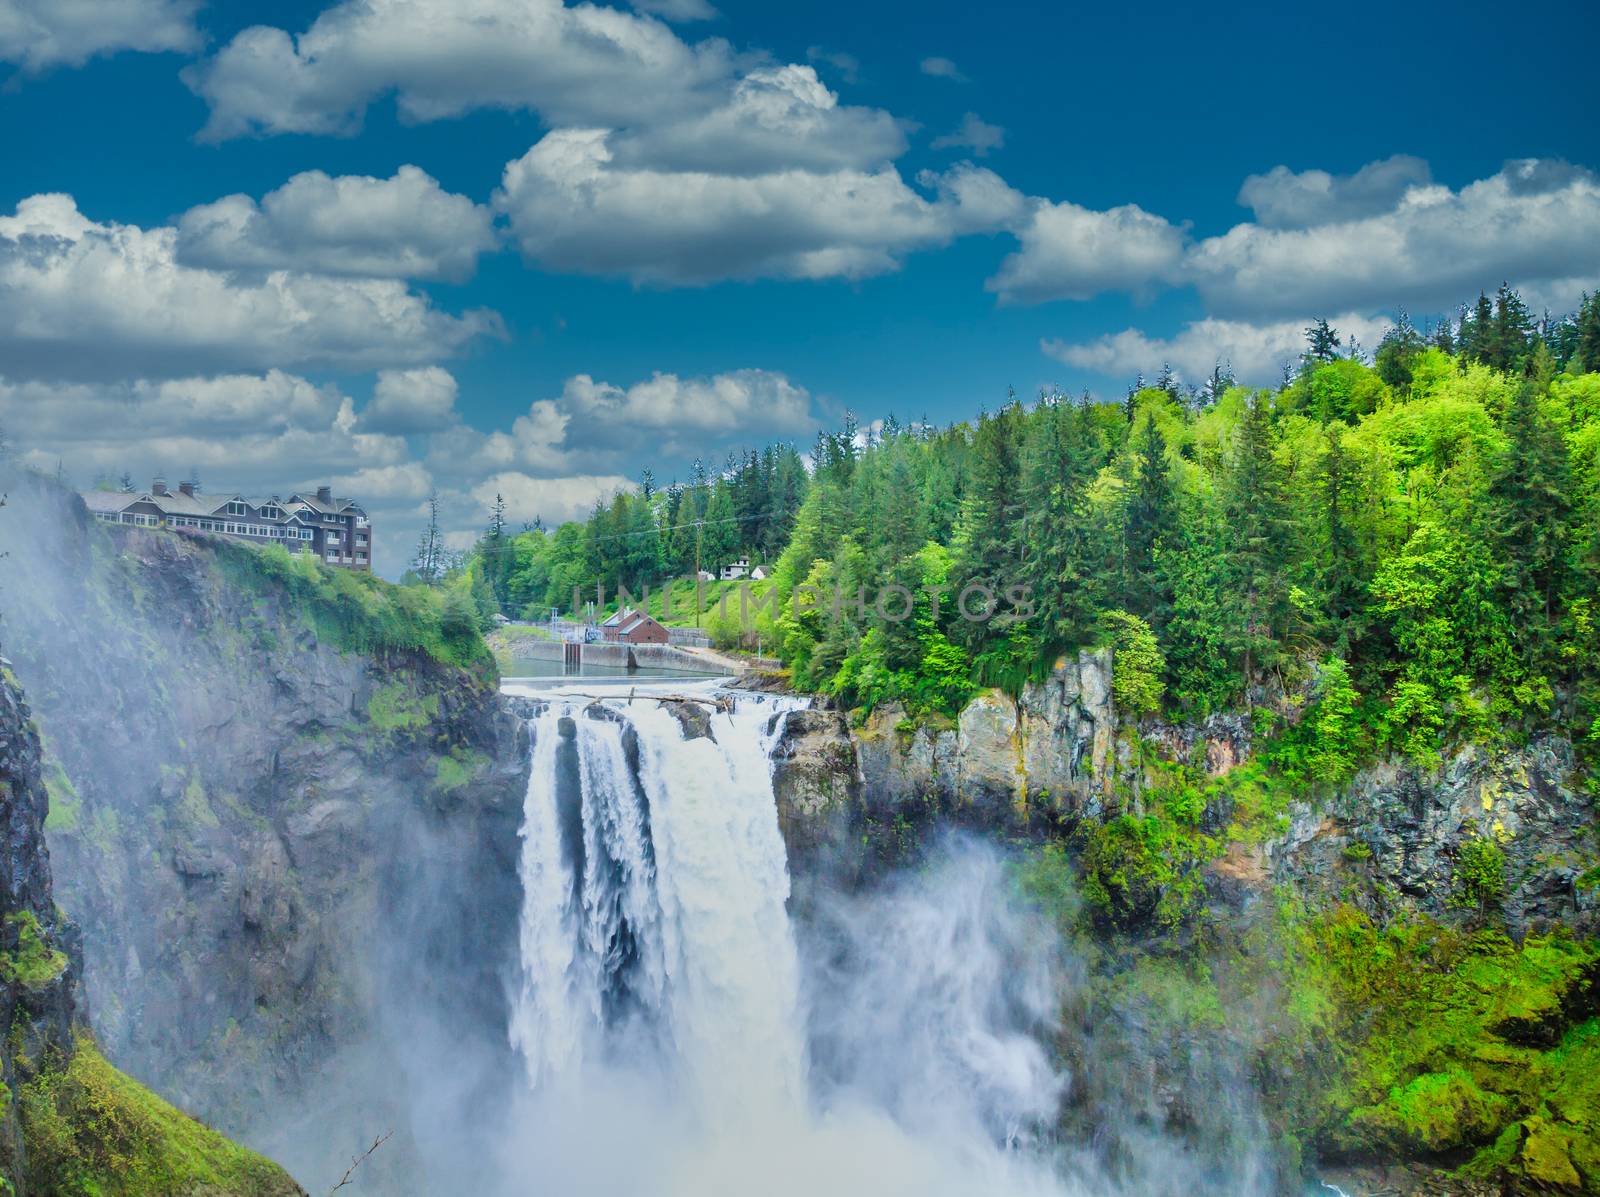 Snoqualmie Falls in Washington State by dbvirago